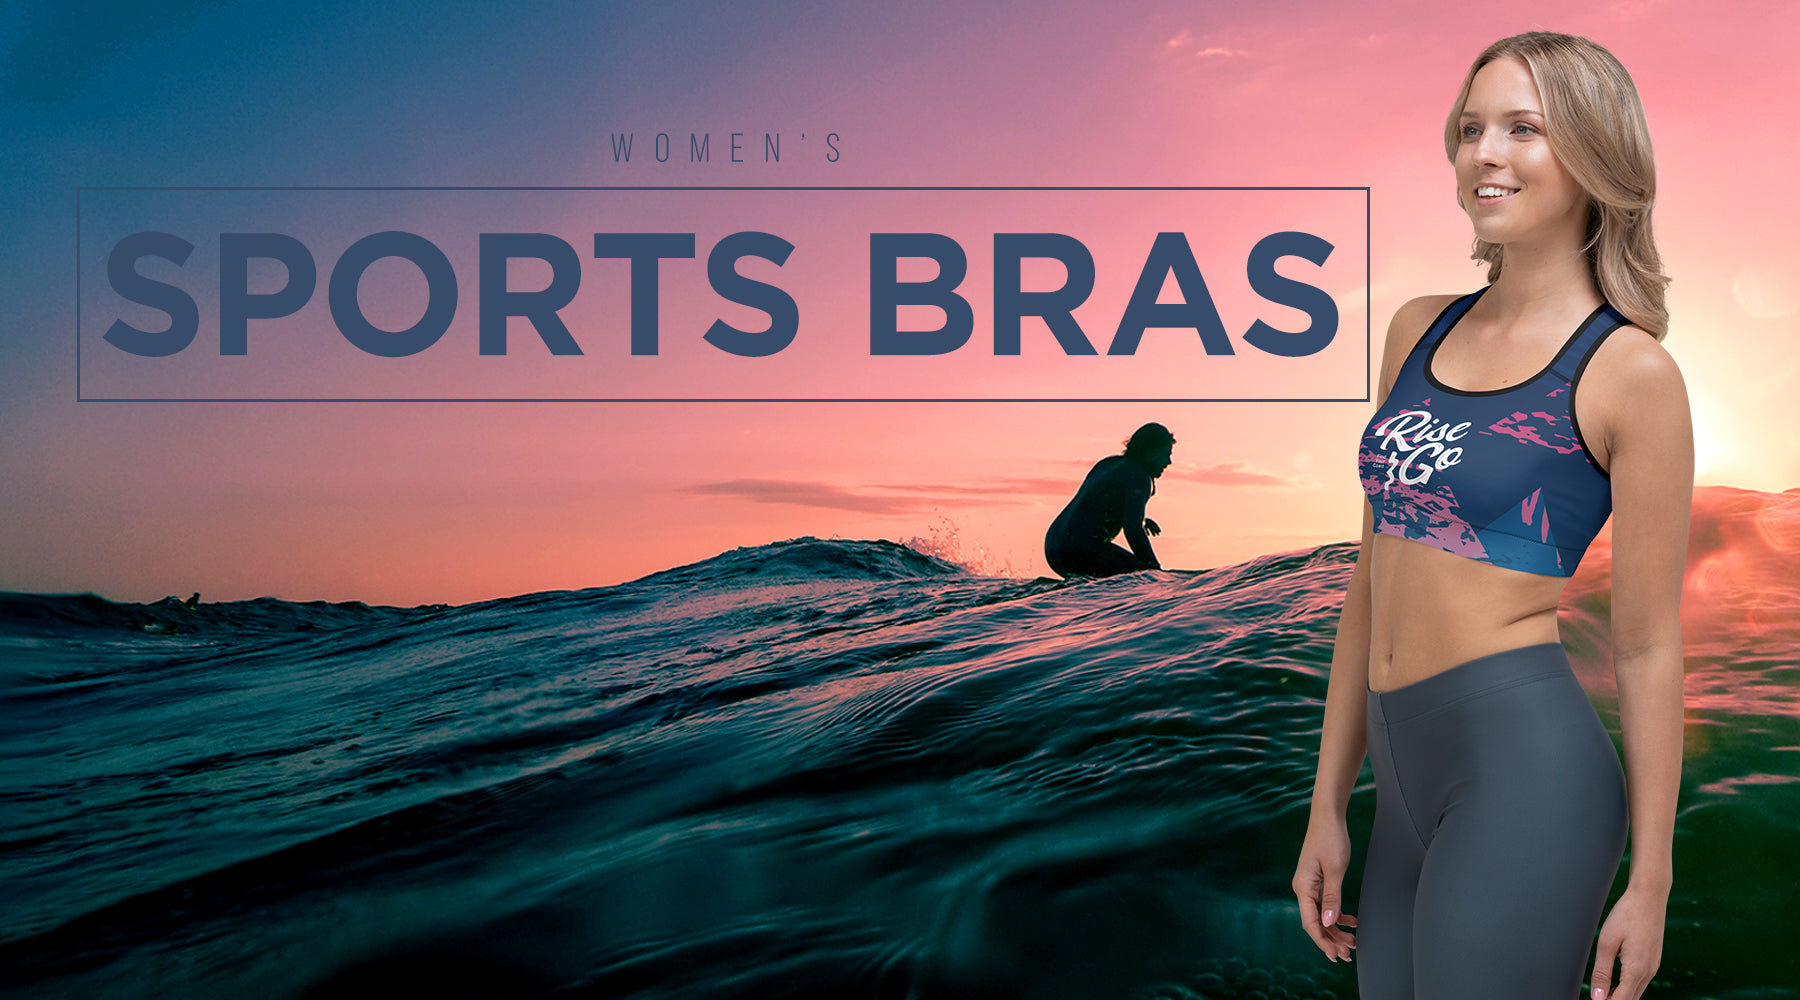 Find Your Coast Sports Bras